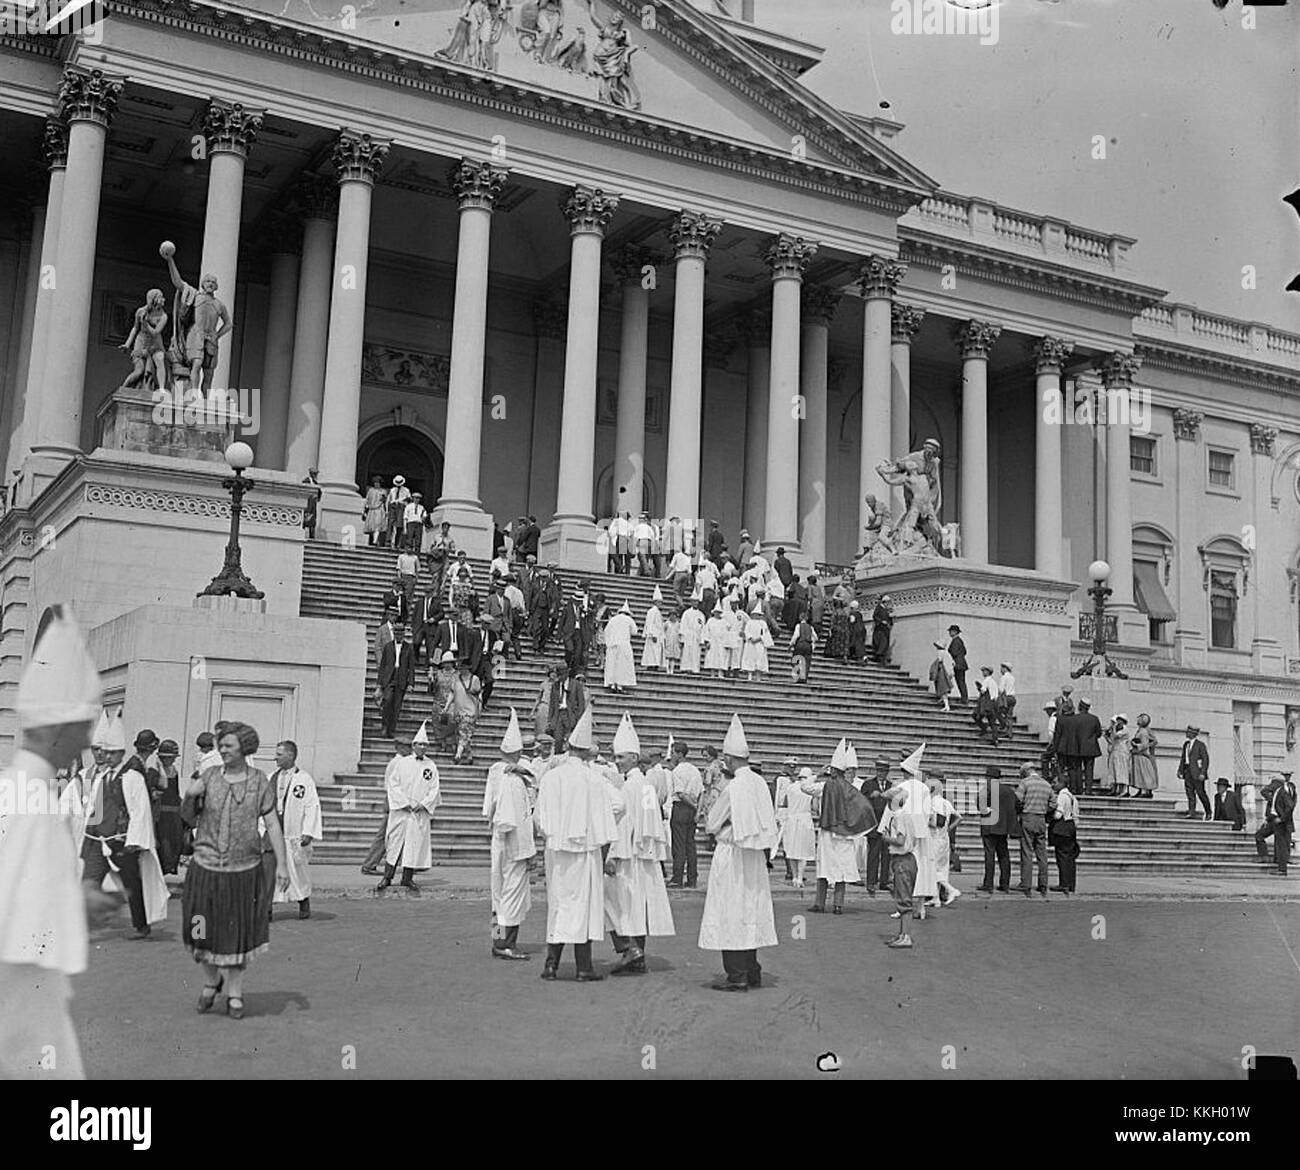 Klansmen at Capitol, 1925 Stock Photo